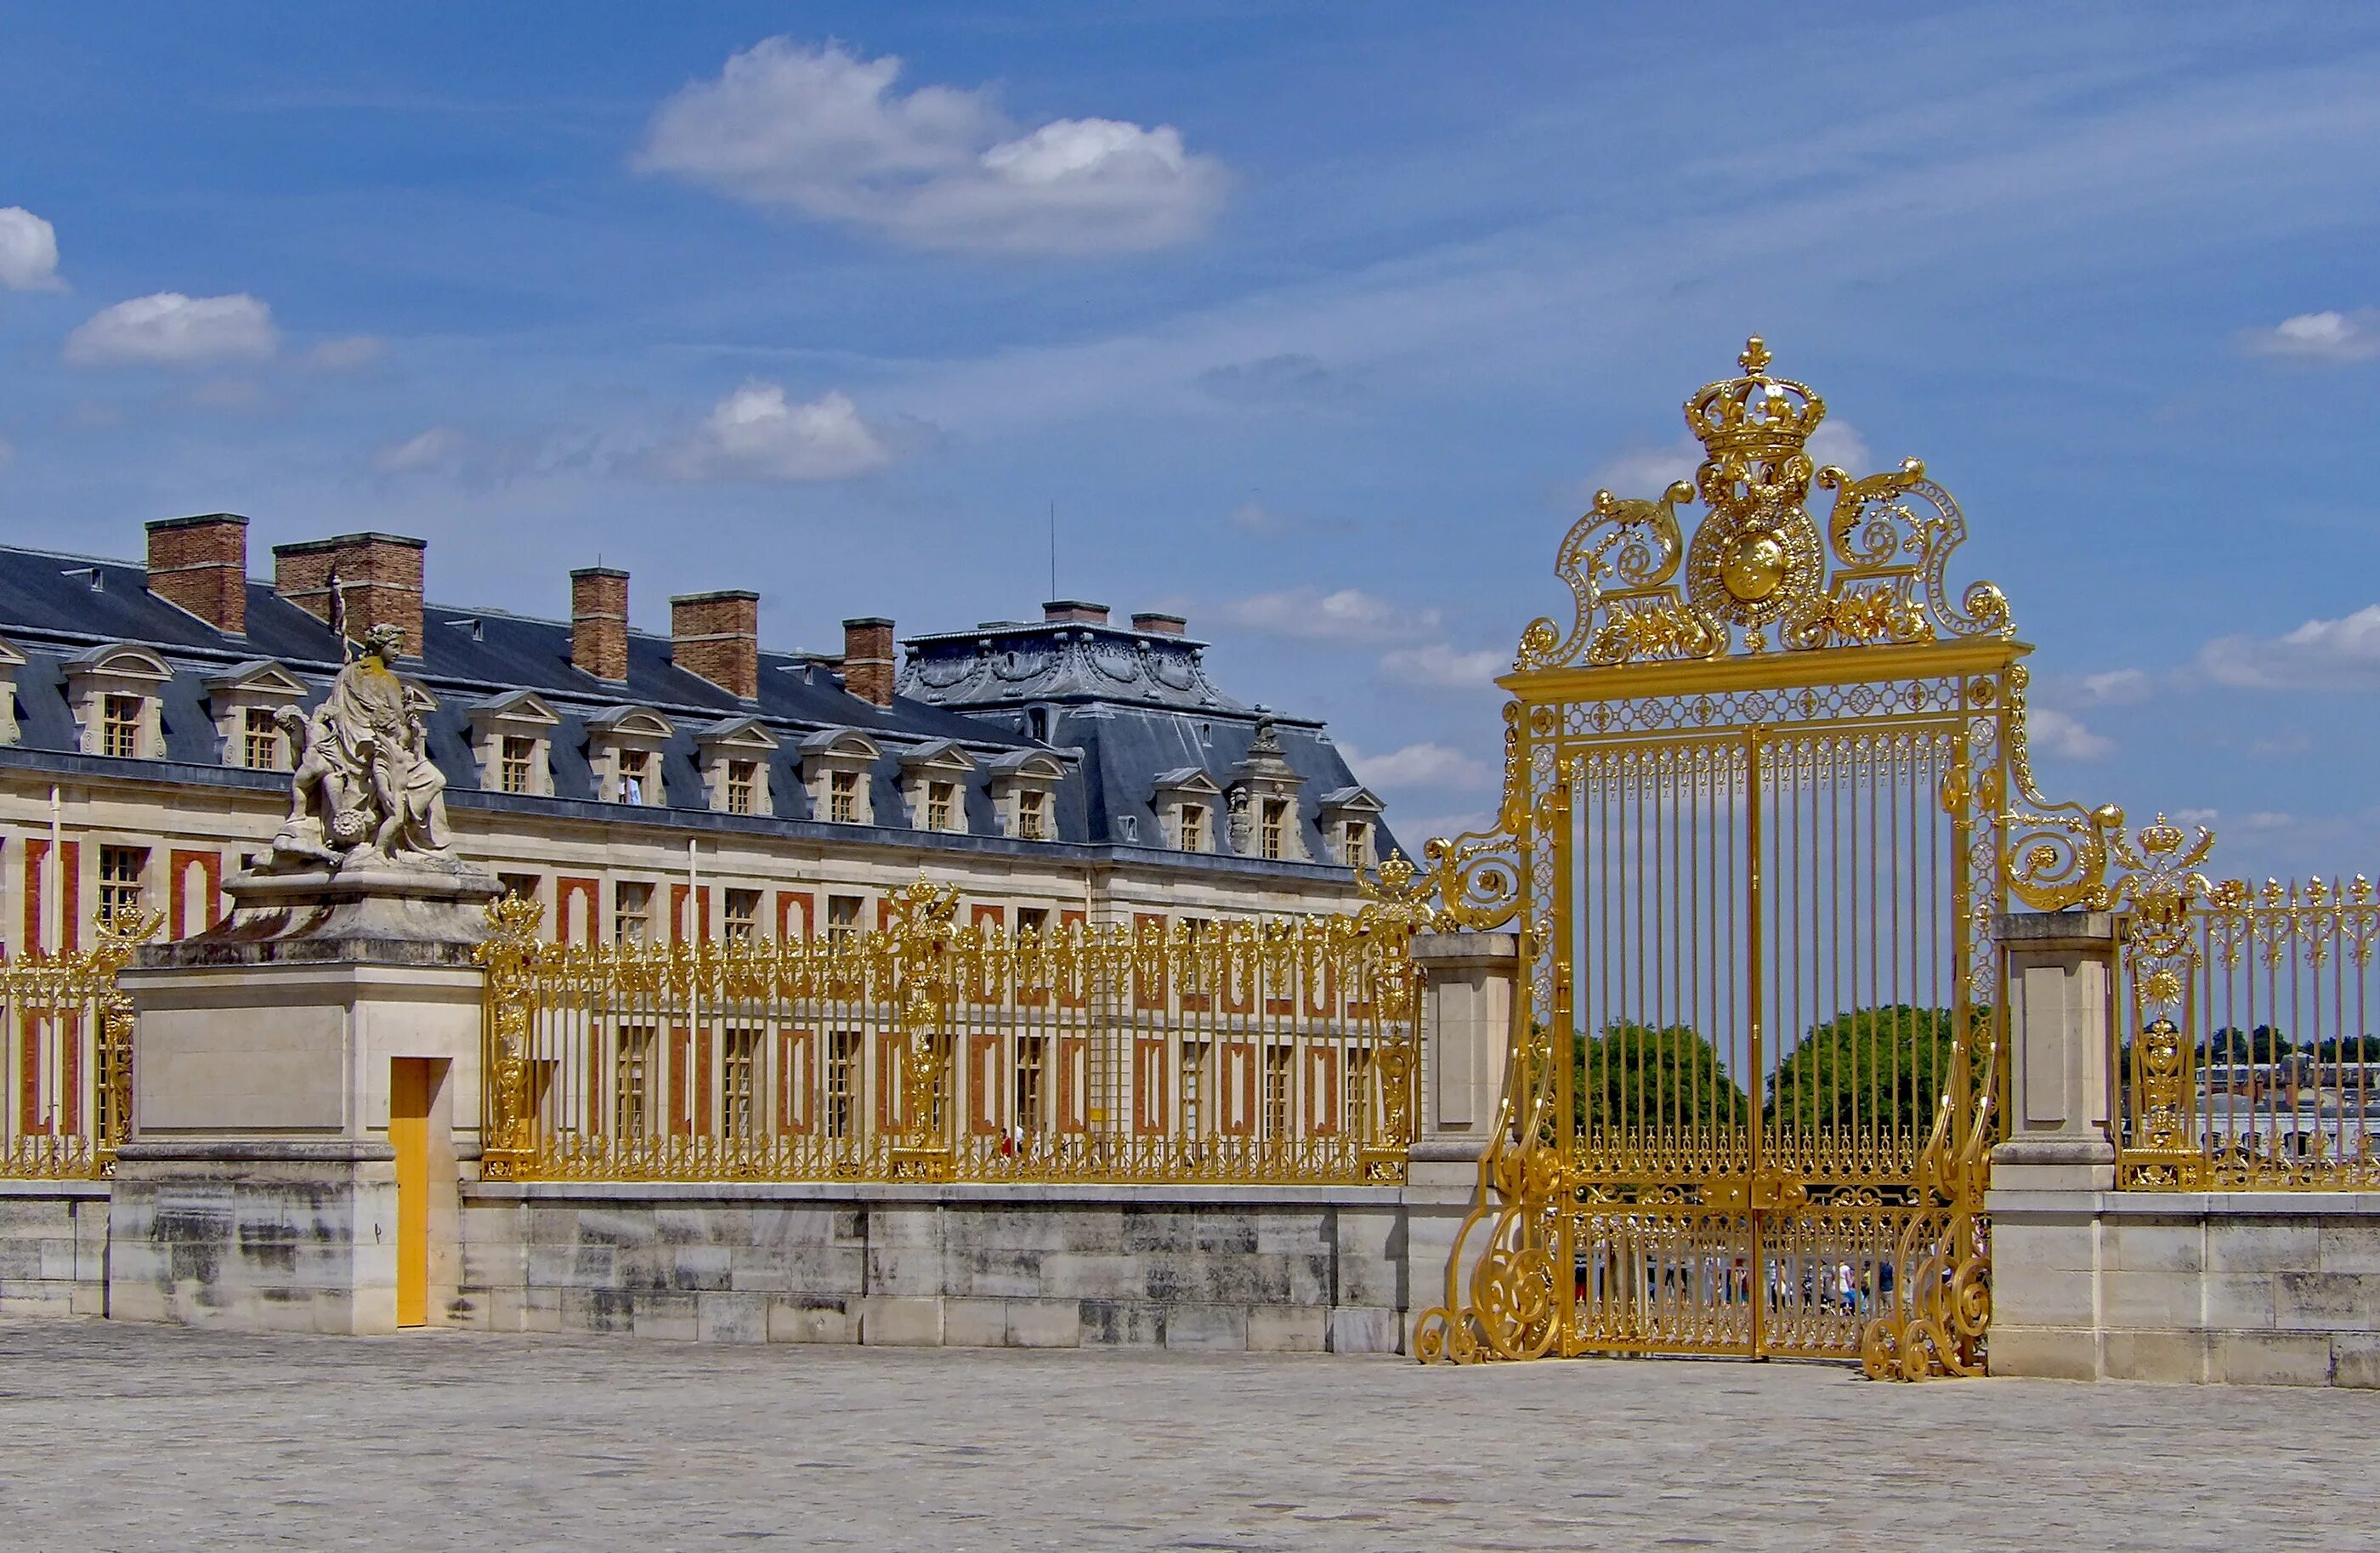 Версаль Франция Королевский двор. Замок Версаль Франция. Королевский дворец в Версале. Версальский дворец ворота. Про версаль